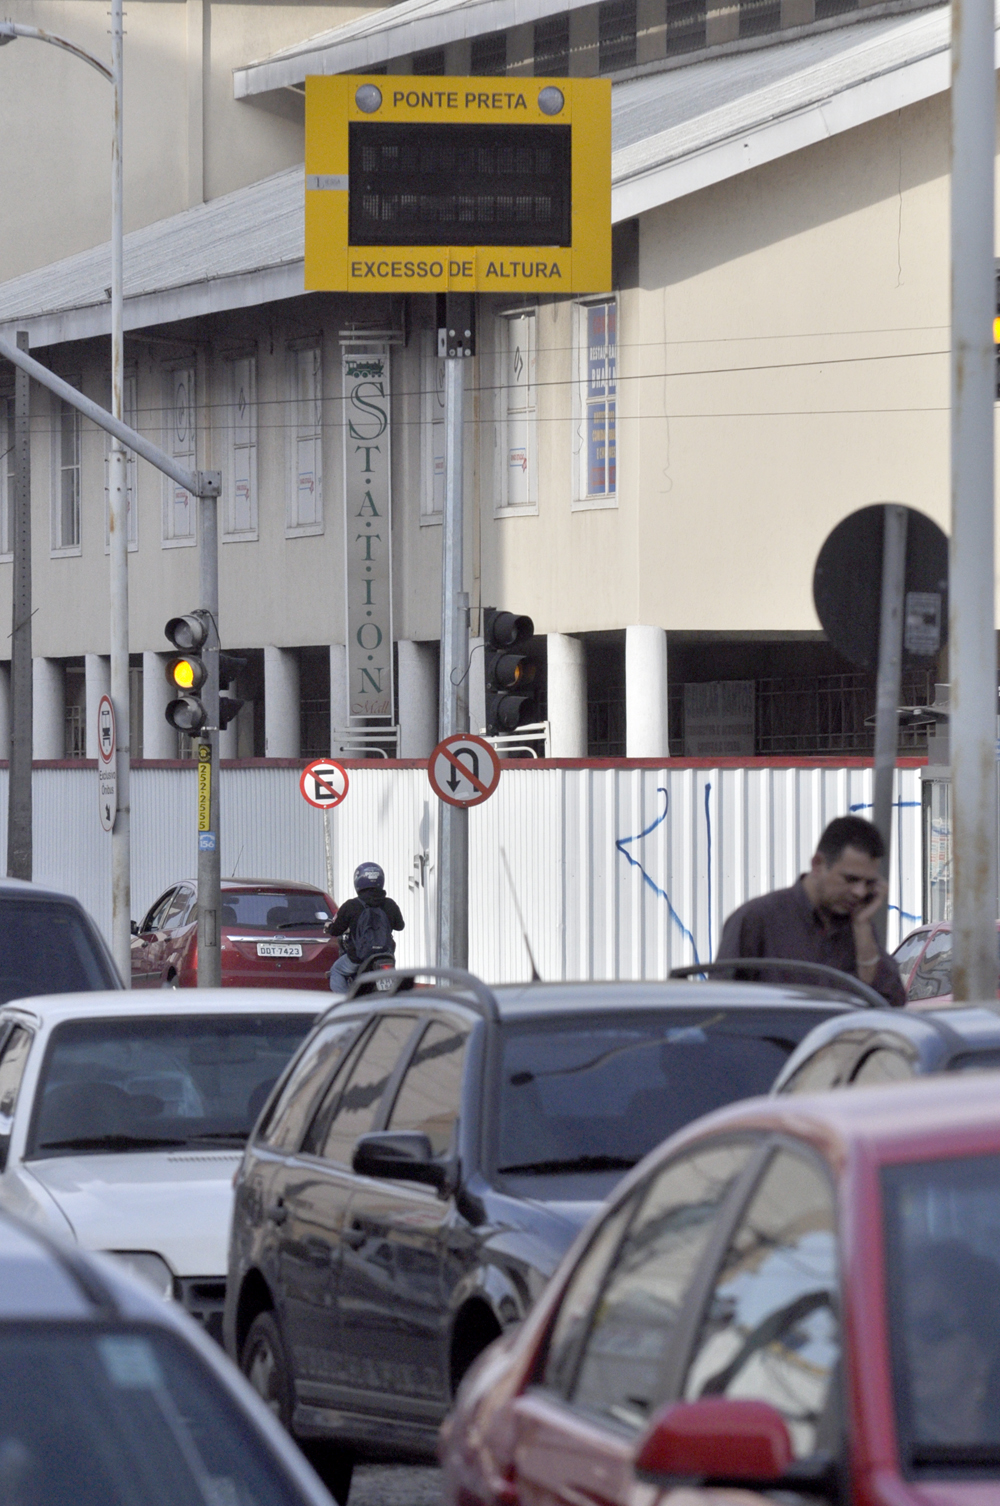 Jair Cézar anuncia possibilidade de baixar asfalto na Ponte Preta 